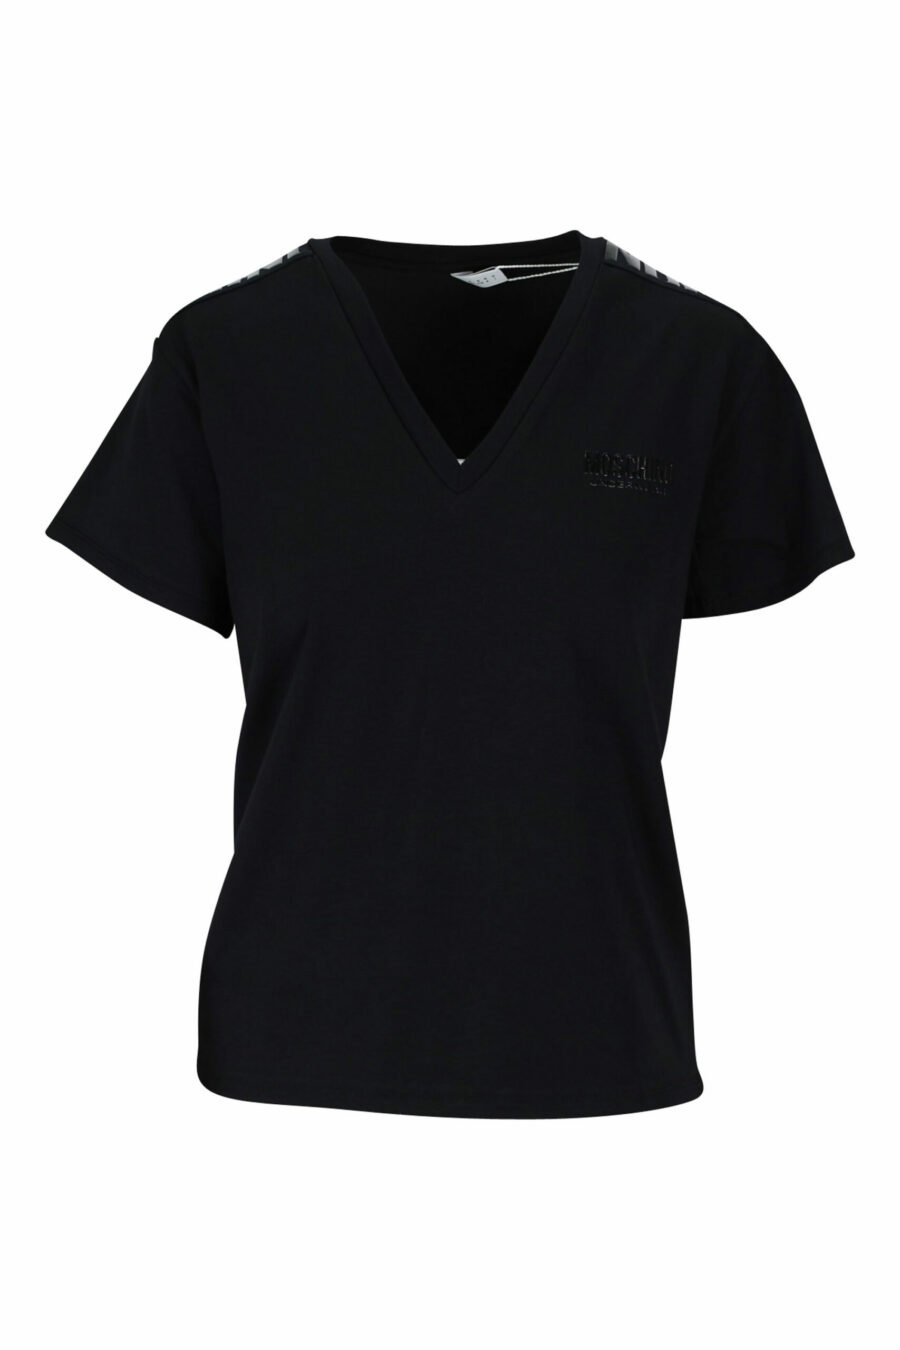 T-shirt noir avec col en V et logo ruban monochrome - 889316614954 scaled